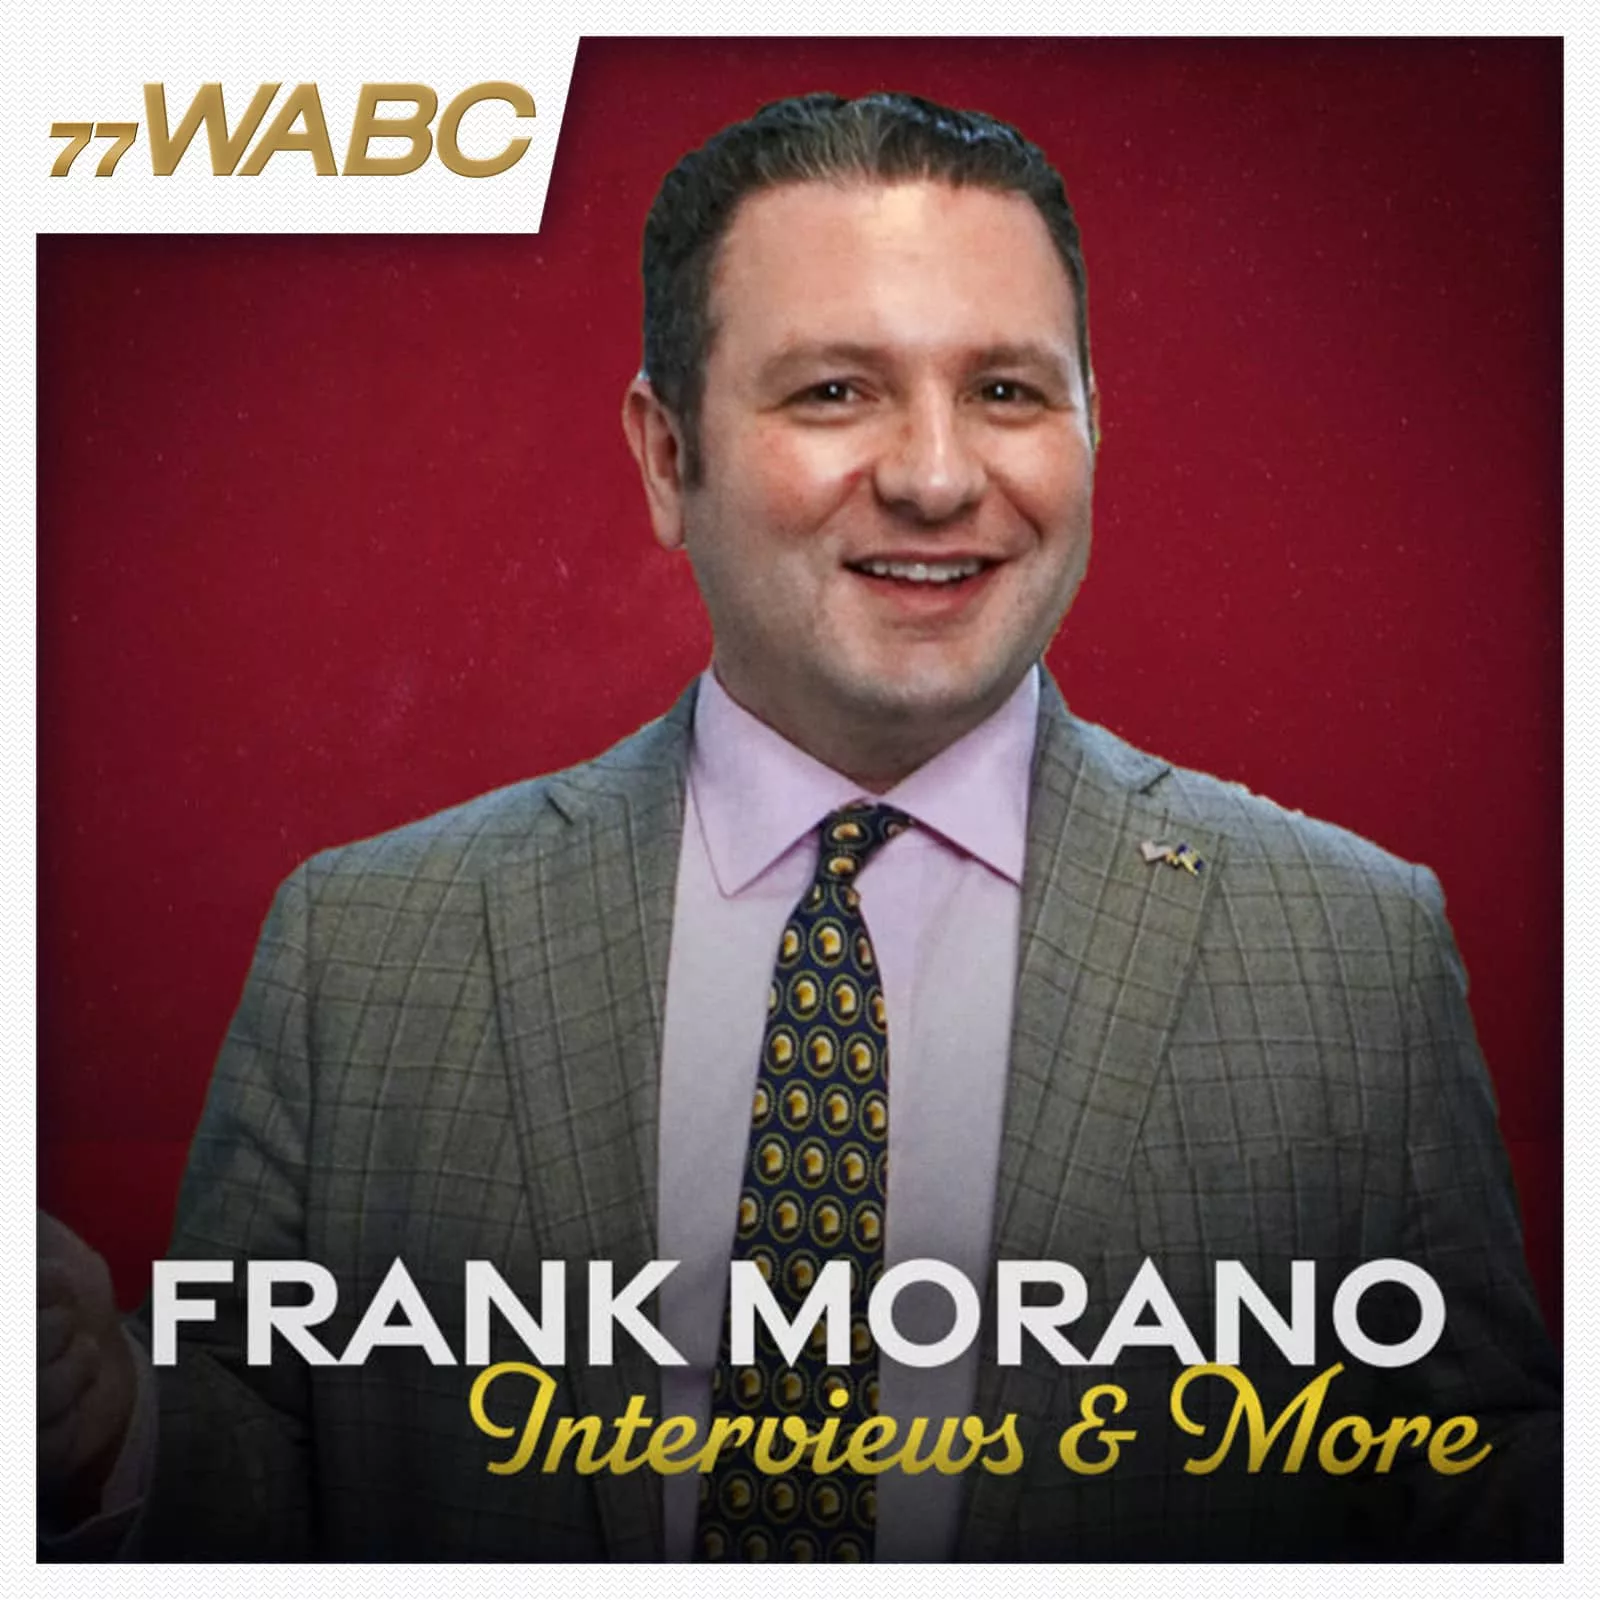 frank-morano-interviews-and-more-podcast-new-logo58994